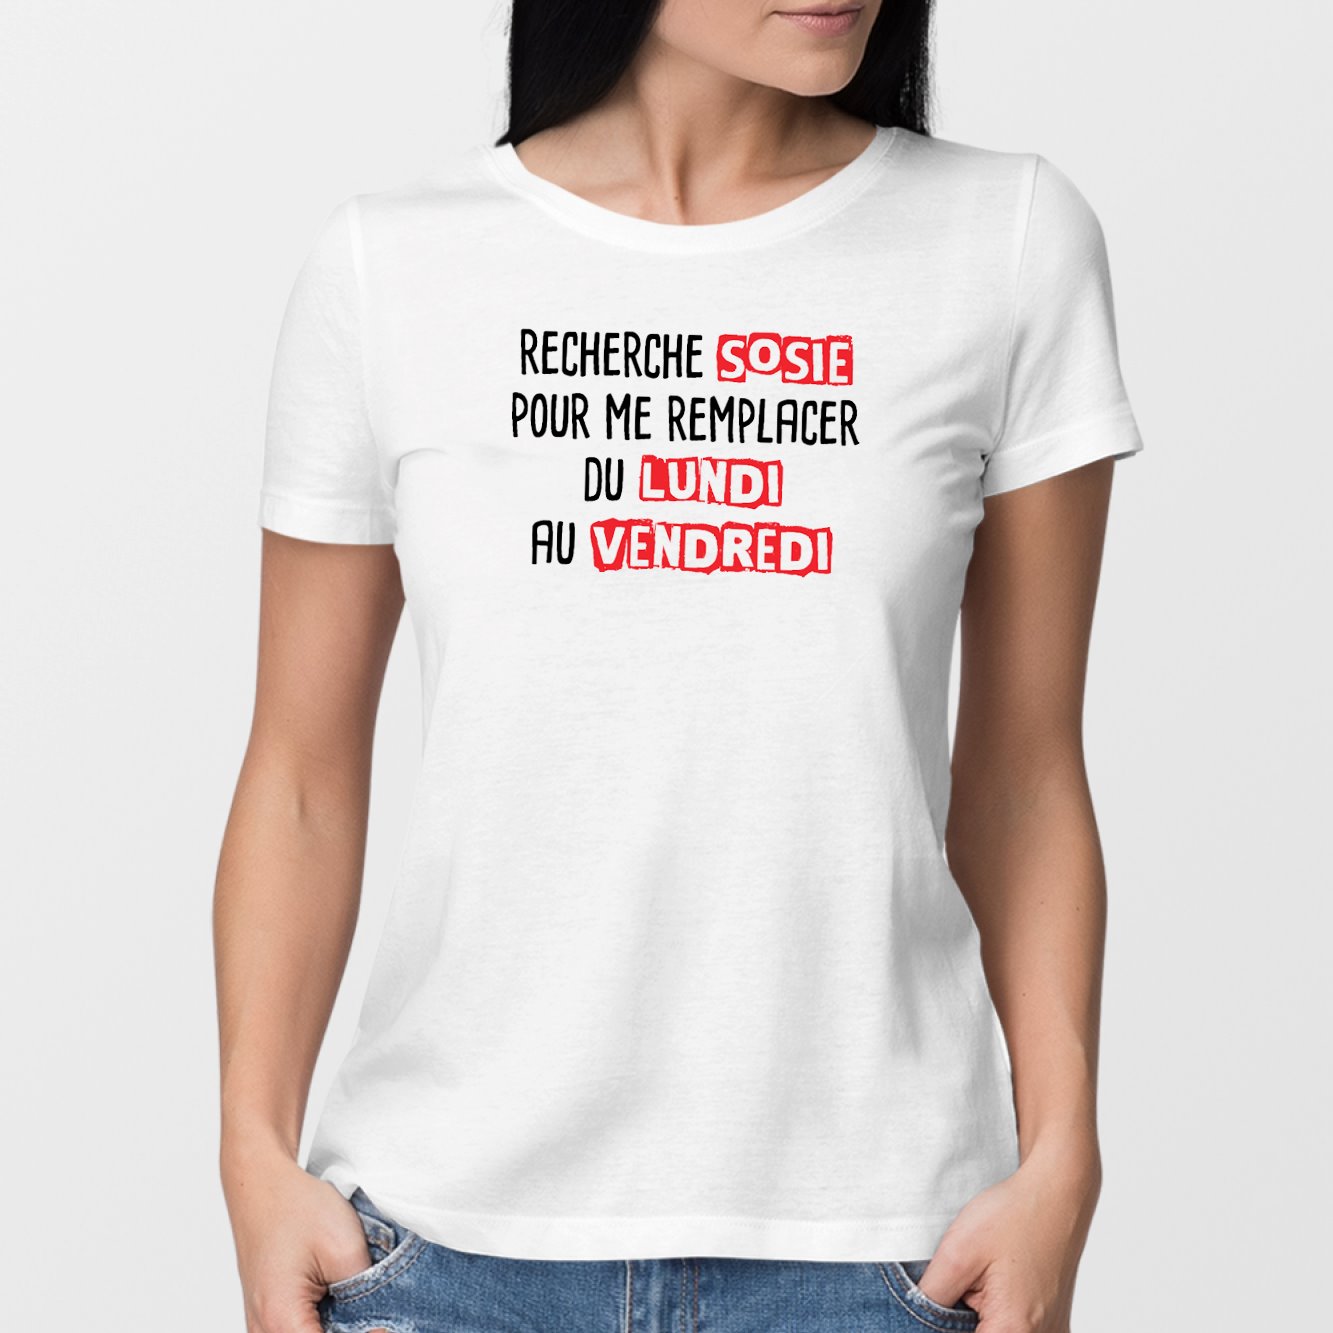 T-Shirt Femme Recherche sosie du lundi au vendredi Blanc